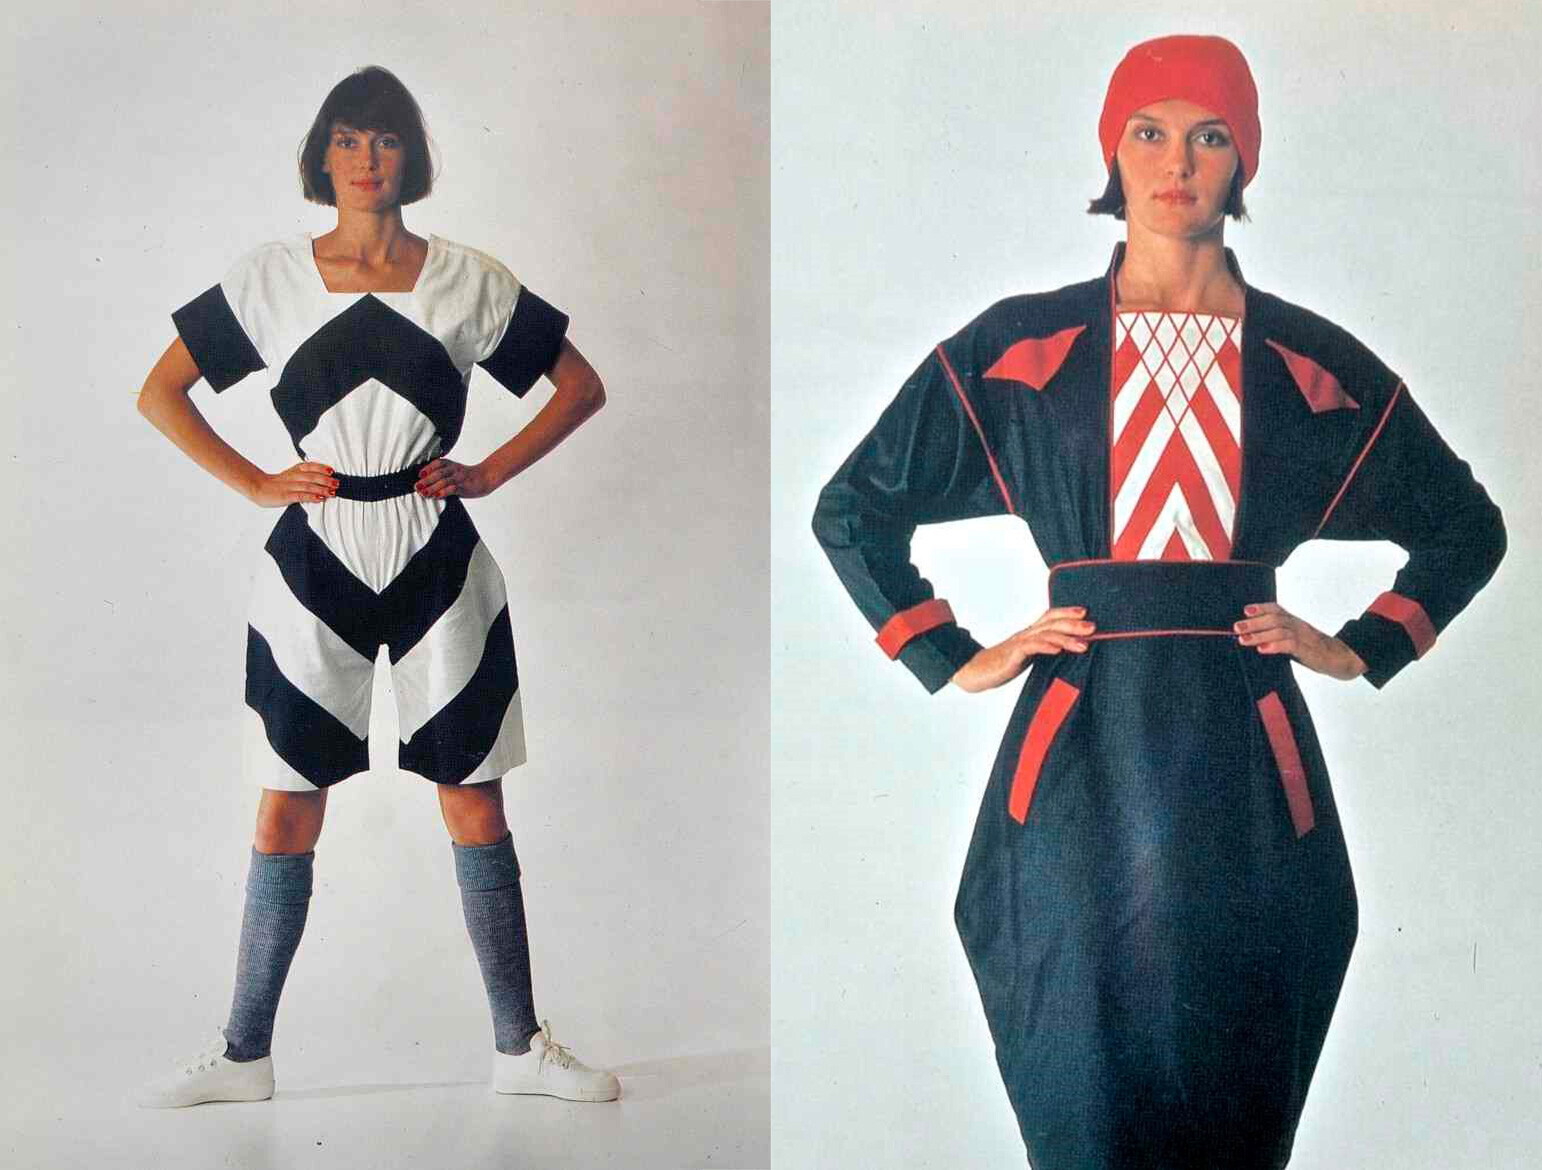 Yelena Khudyakova dalam pakaian olahraga dan pakaian kerja yang dirancang oleh seniman avant-garde Varvara Stepanova. 1985